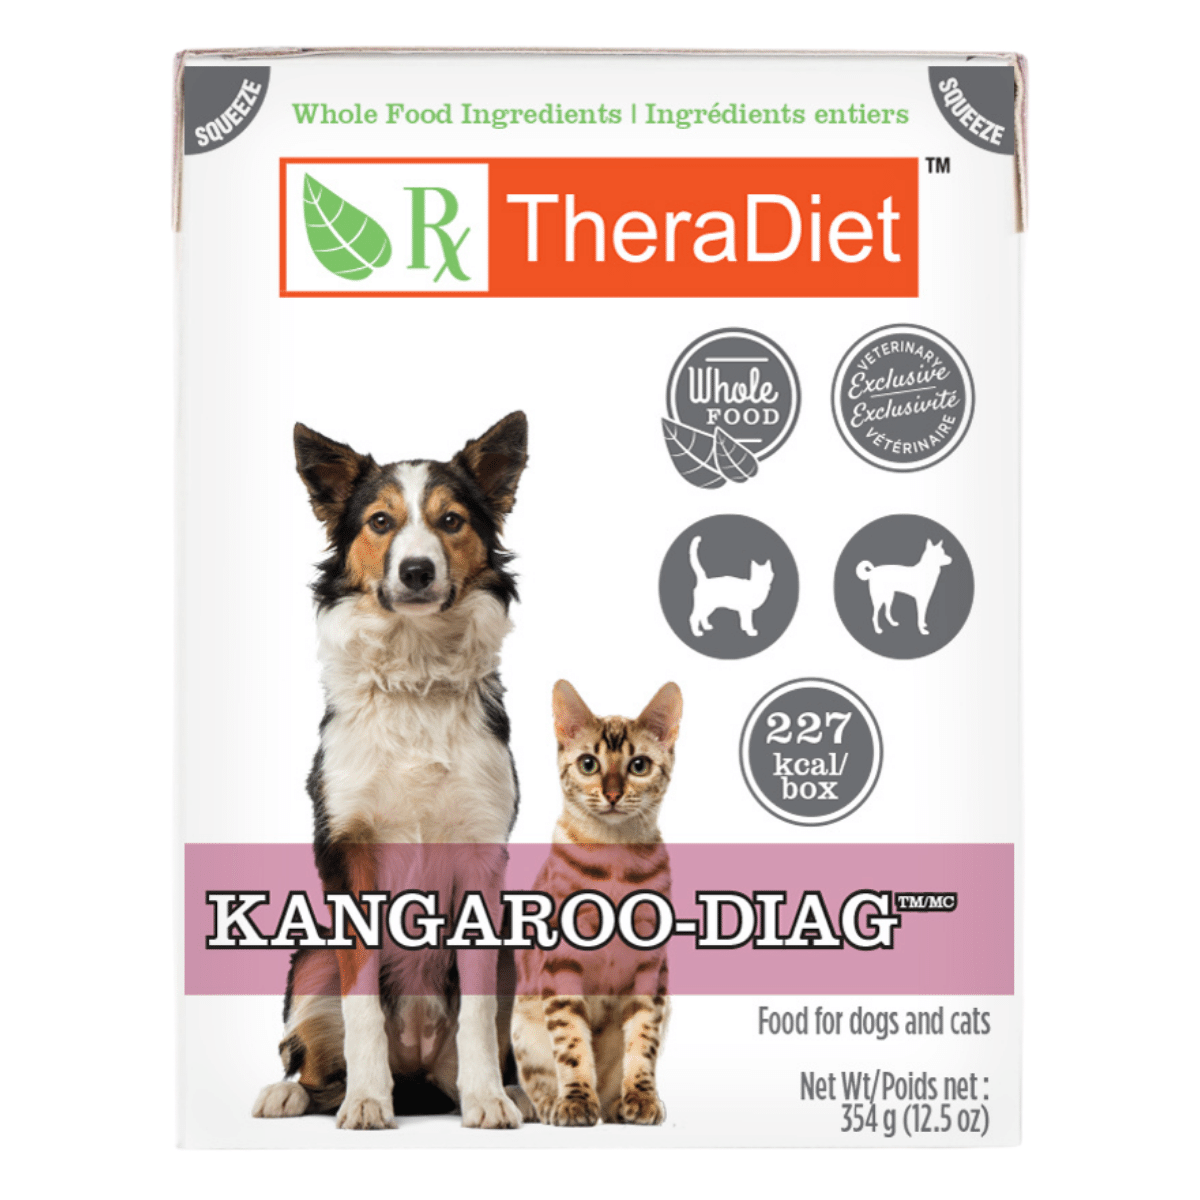 Kangaroo-DIAG Chunky Stew For Dogs And Cats